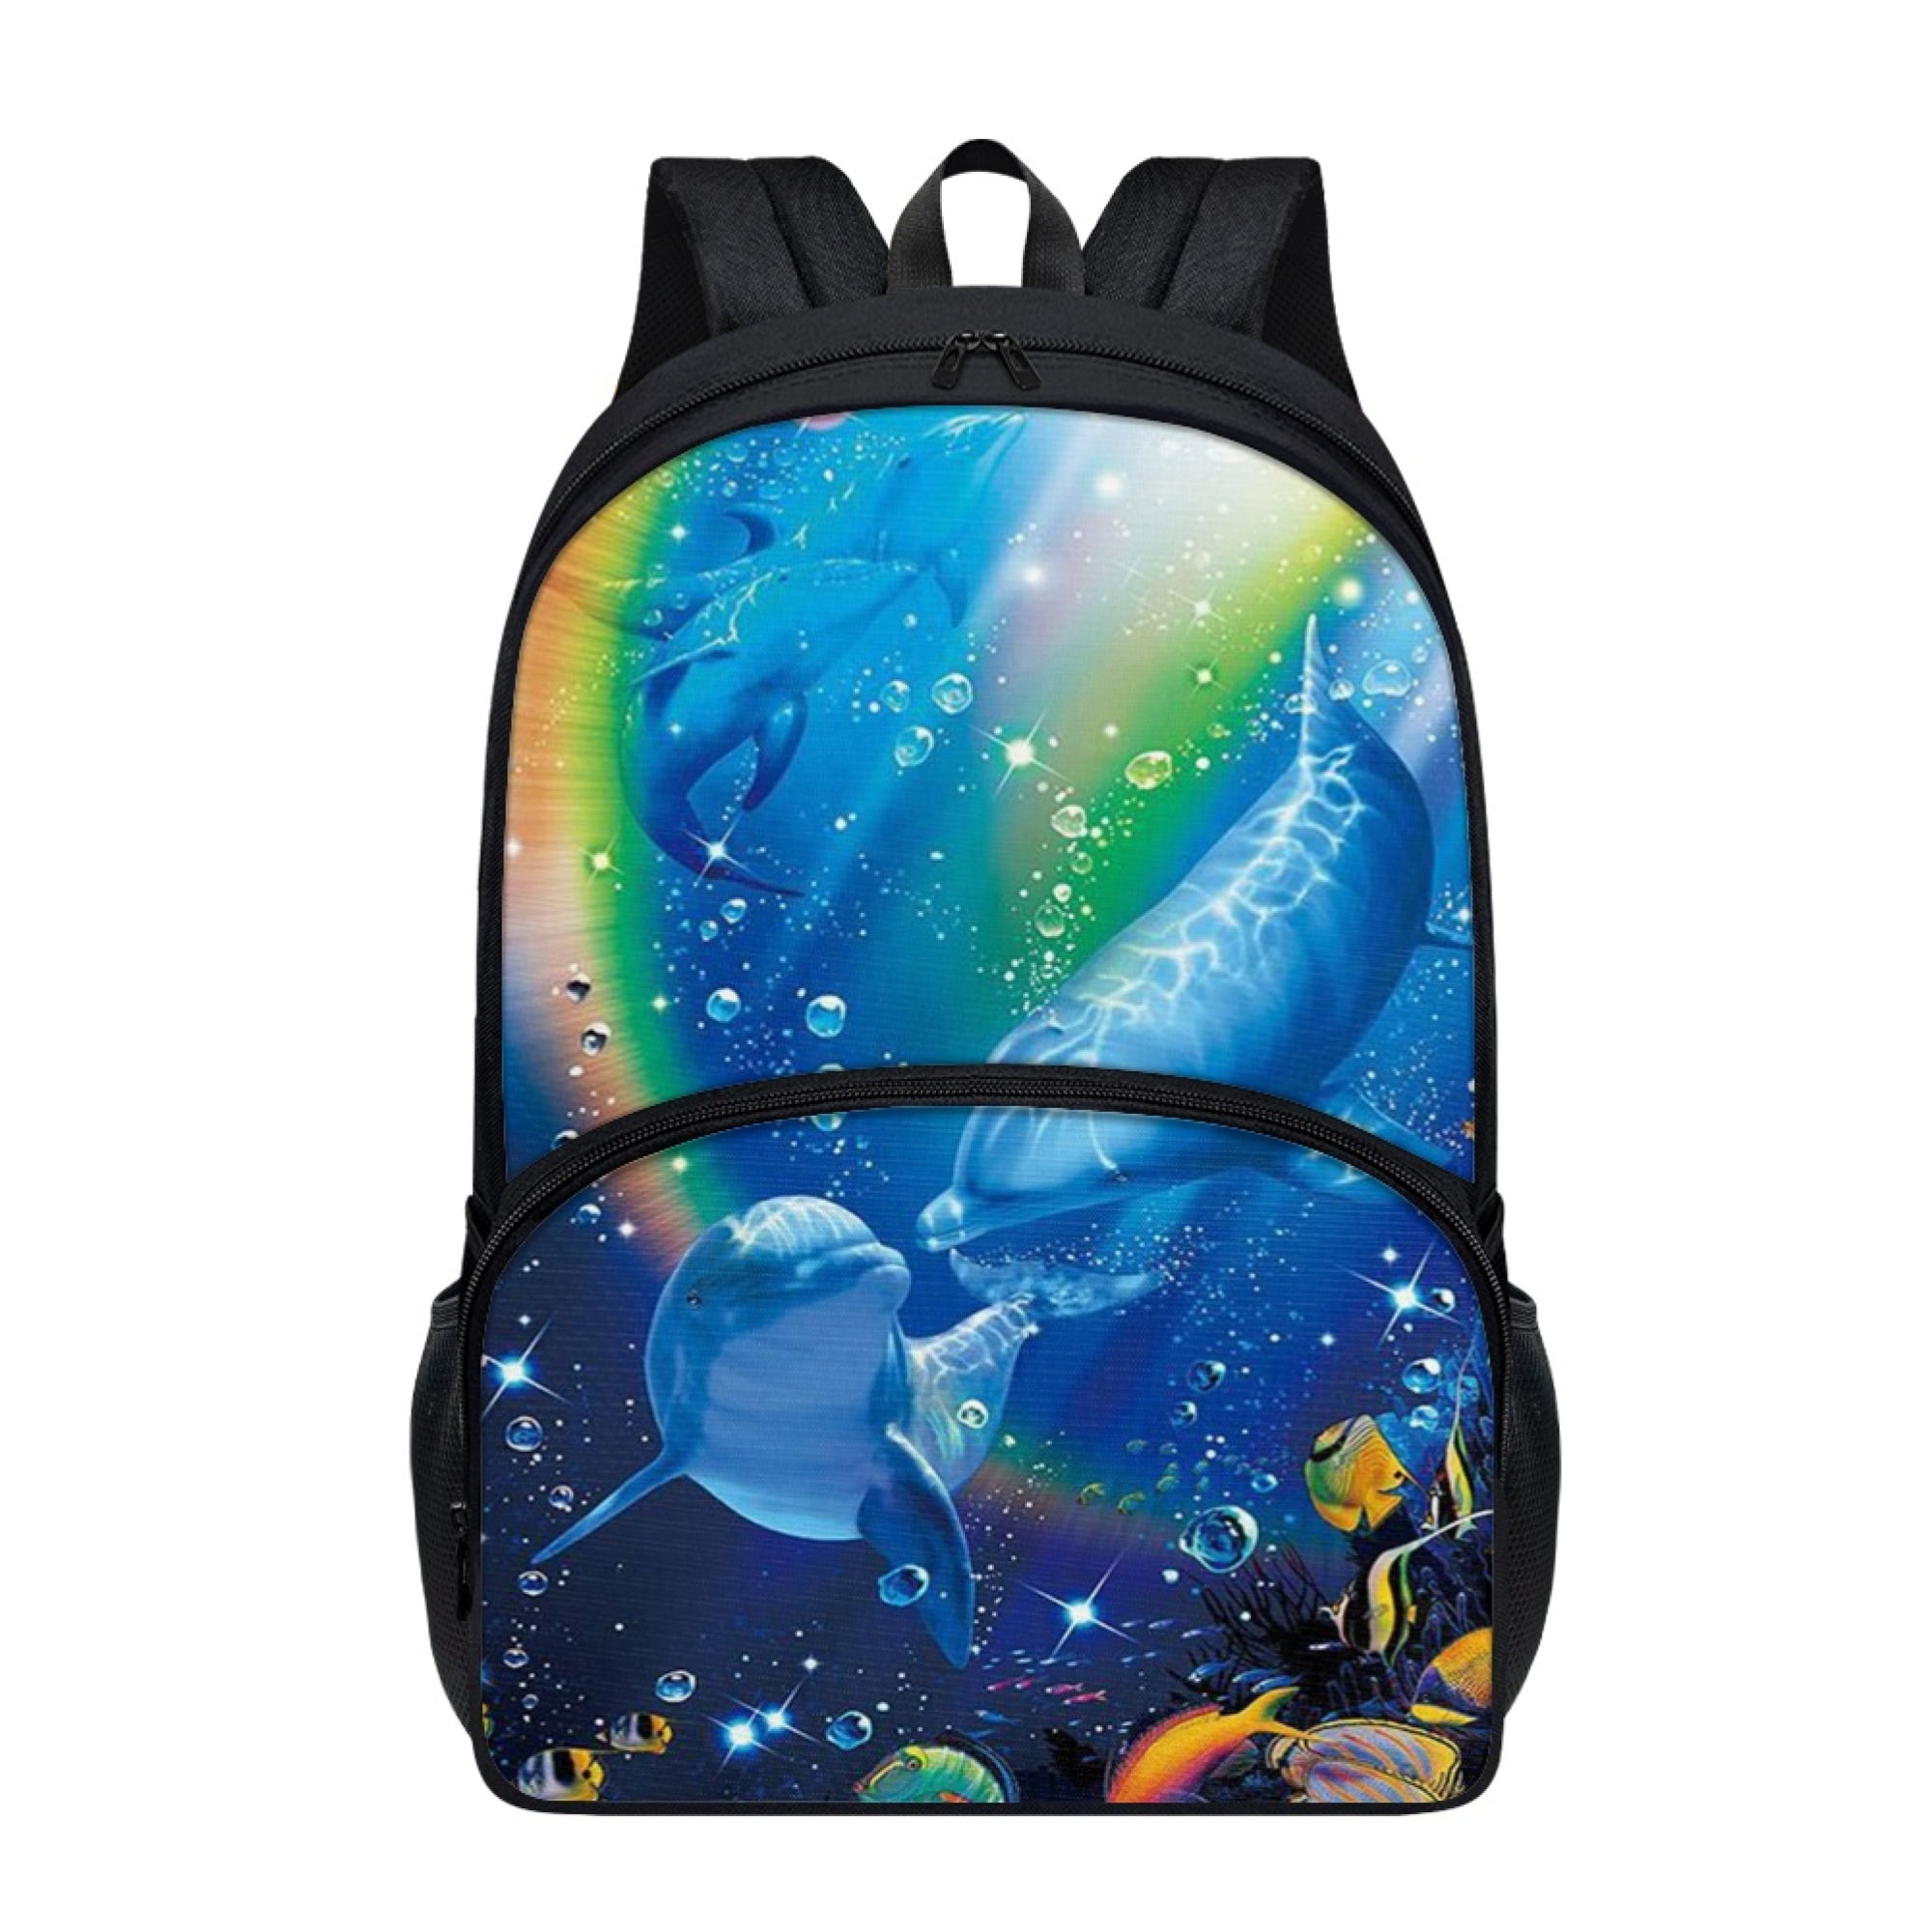 NETILGEN Sea Dolphin Pattern Backpack Little Kids School Bags for Teen Kids  8-14 Lasting Use Preschool Class School Bags Satchel with Adjustable Chest  Strap 